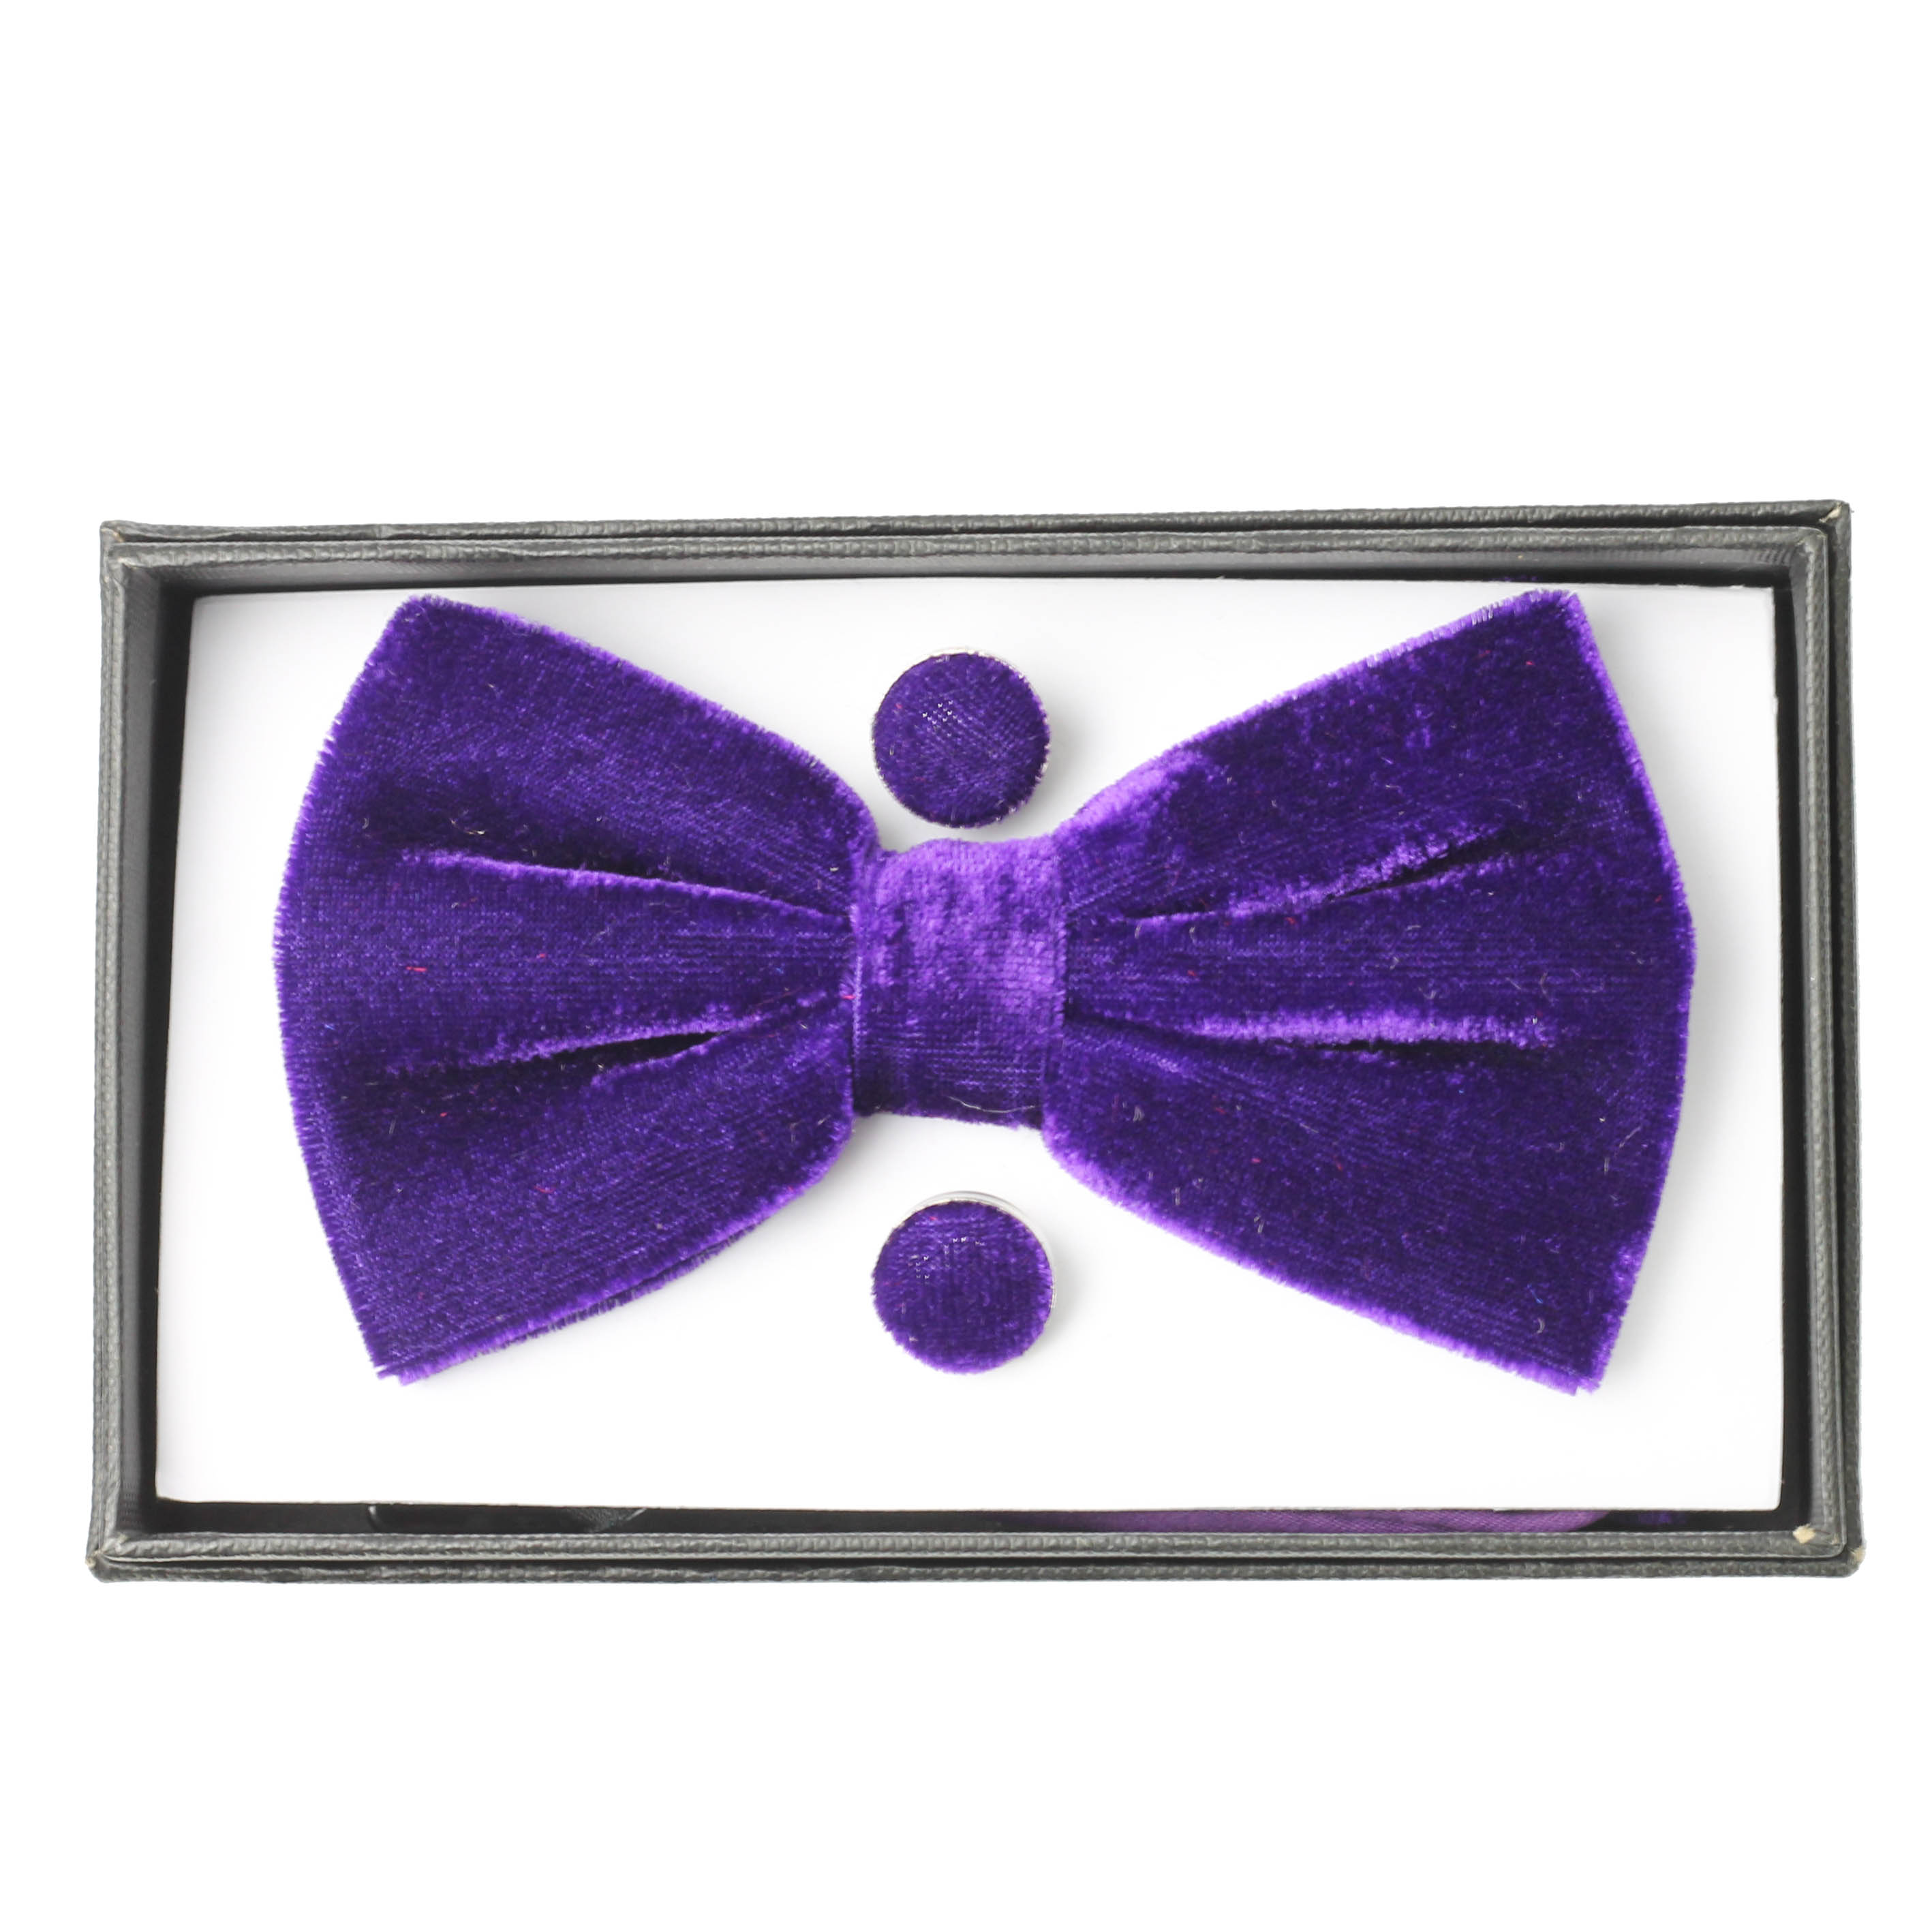 Purple Shiny Velvet Bow Tie With Cufflink Pocket Square